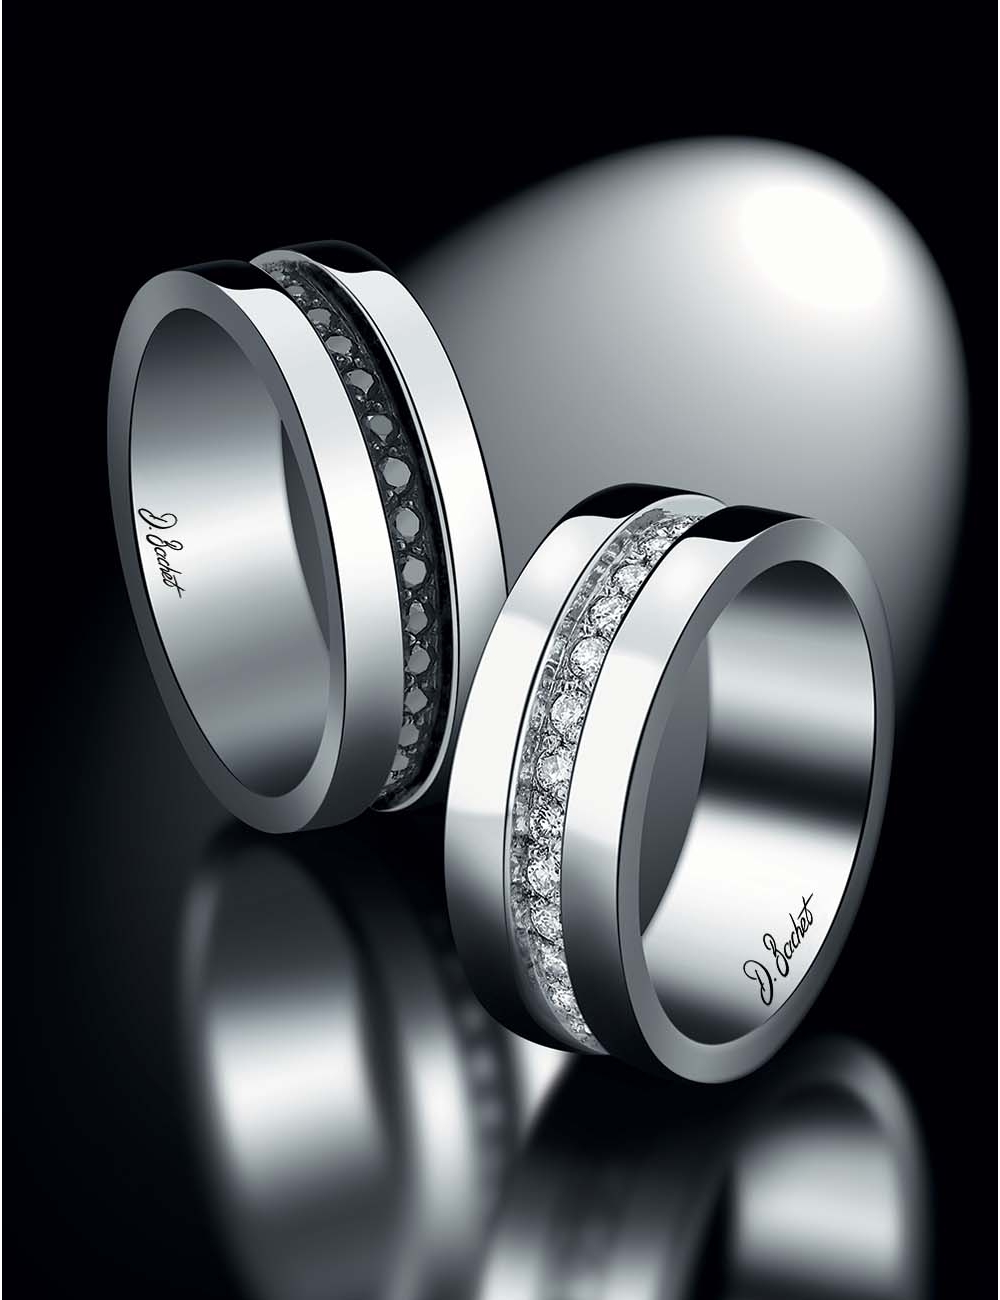 7 mm men's wedding band in platinum with black diamonds, contemporary masculine design, comfort fit, also in white diamonds.